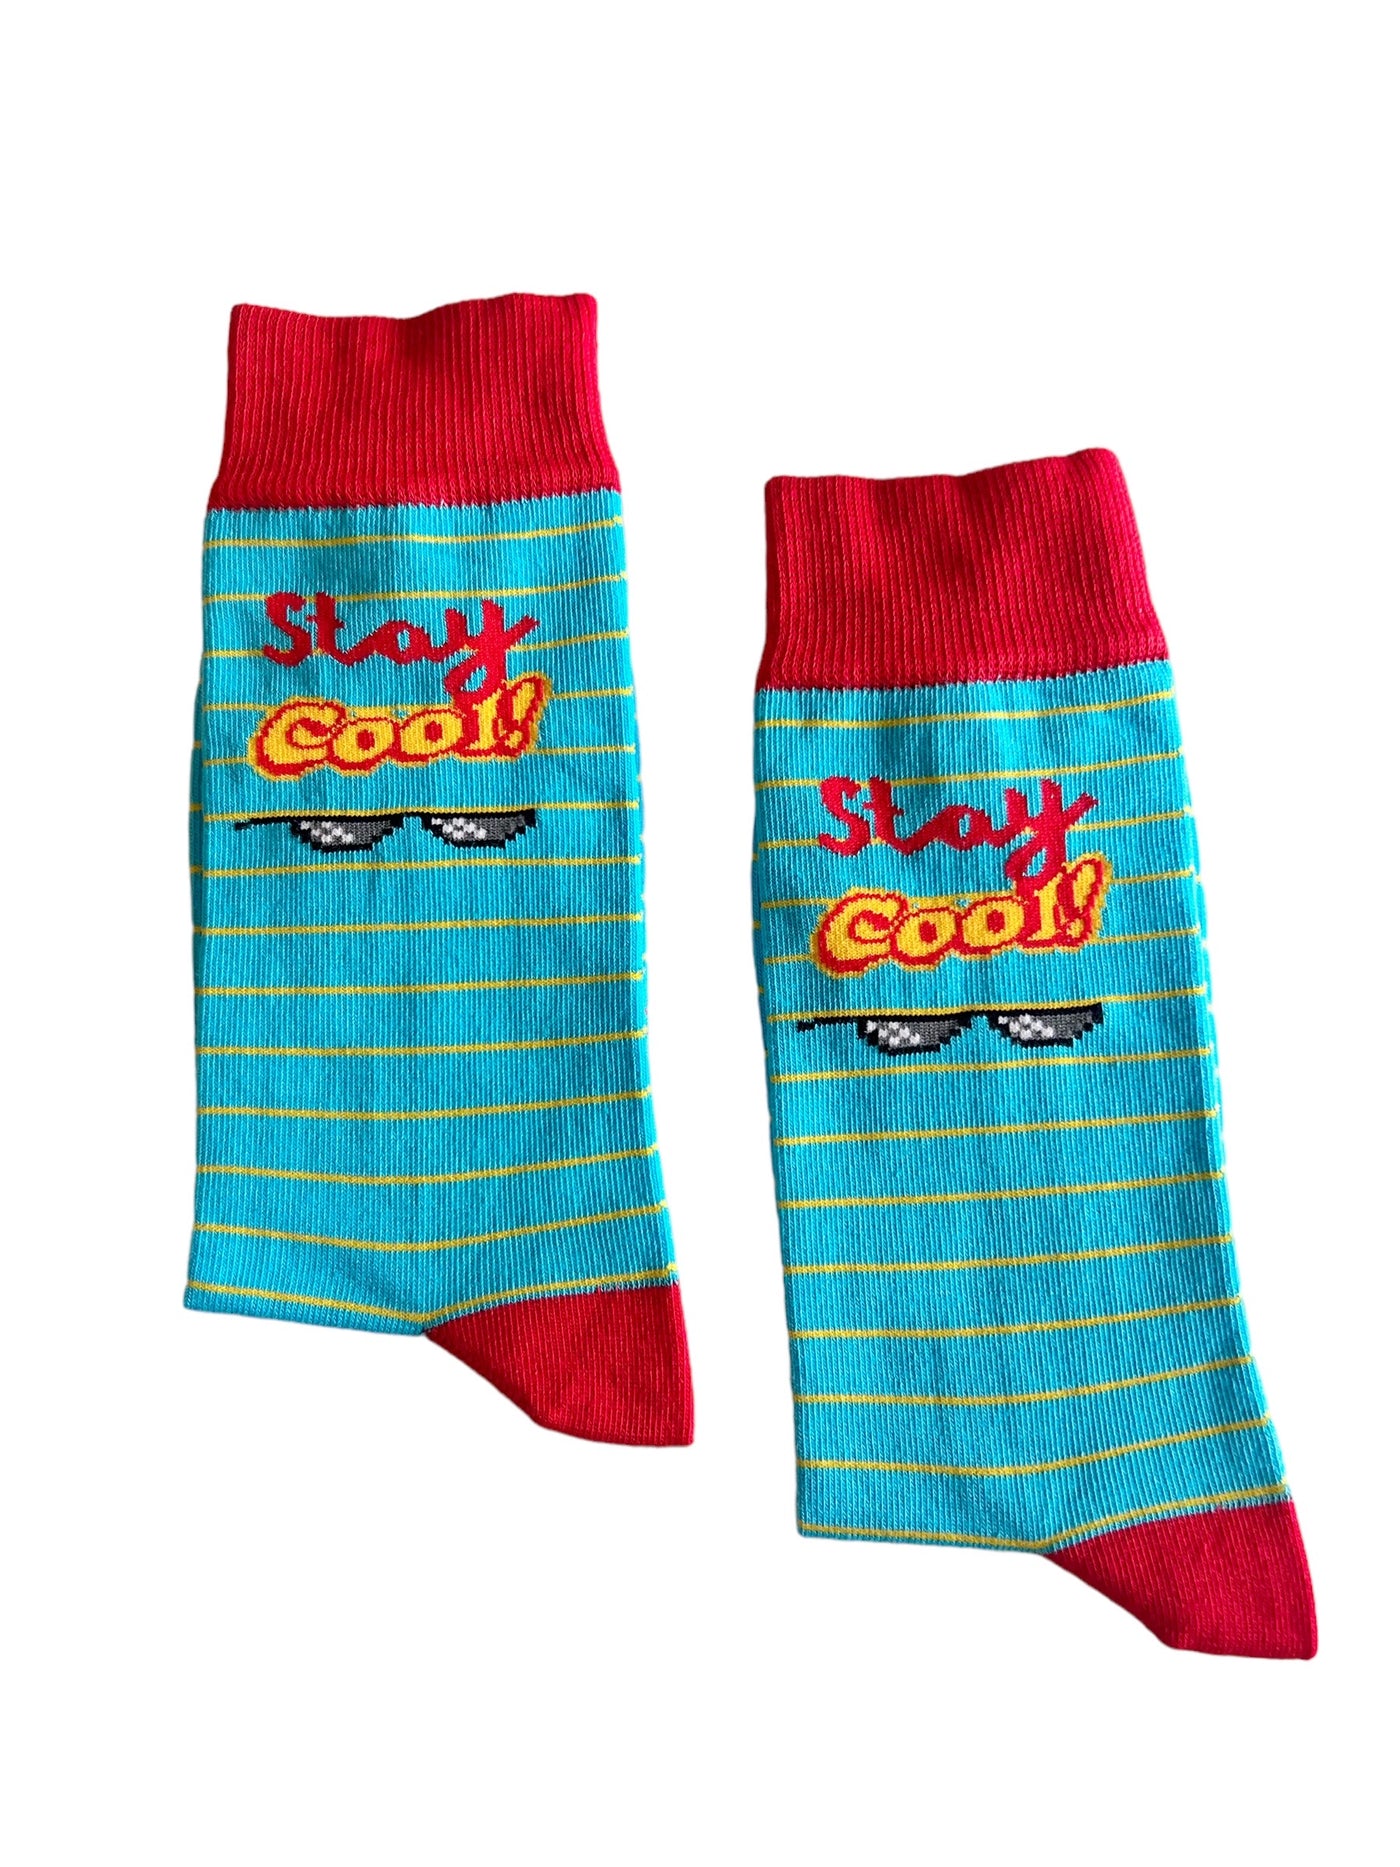 Stay cool socks